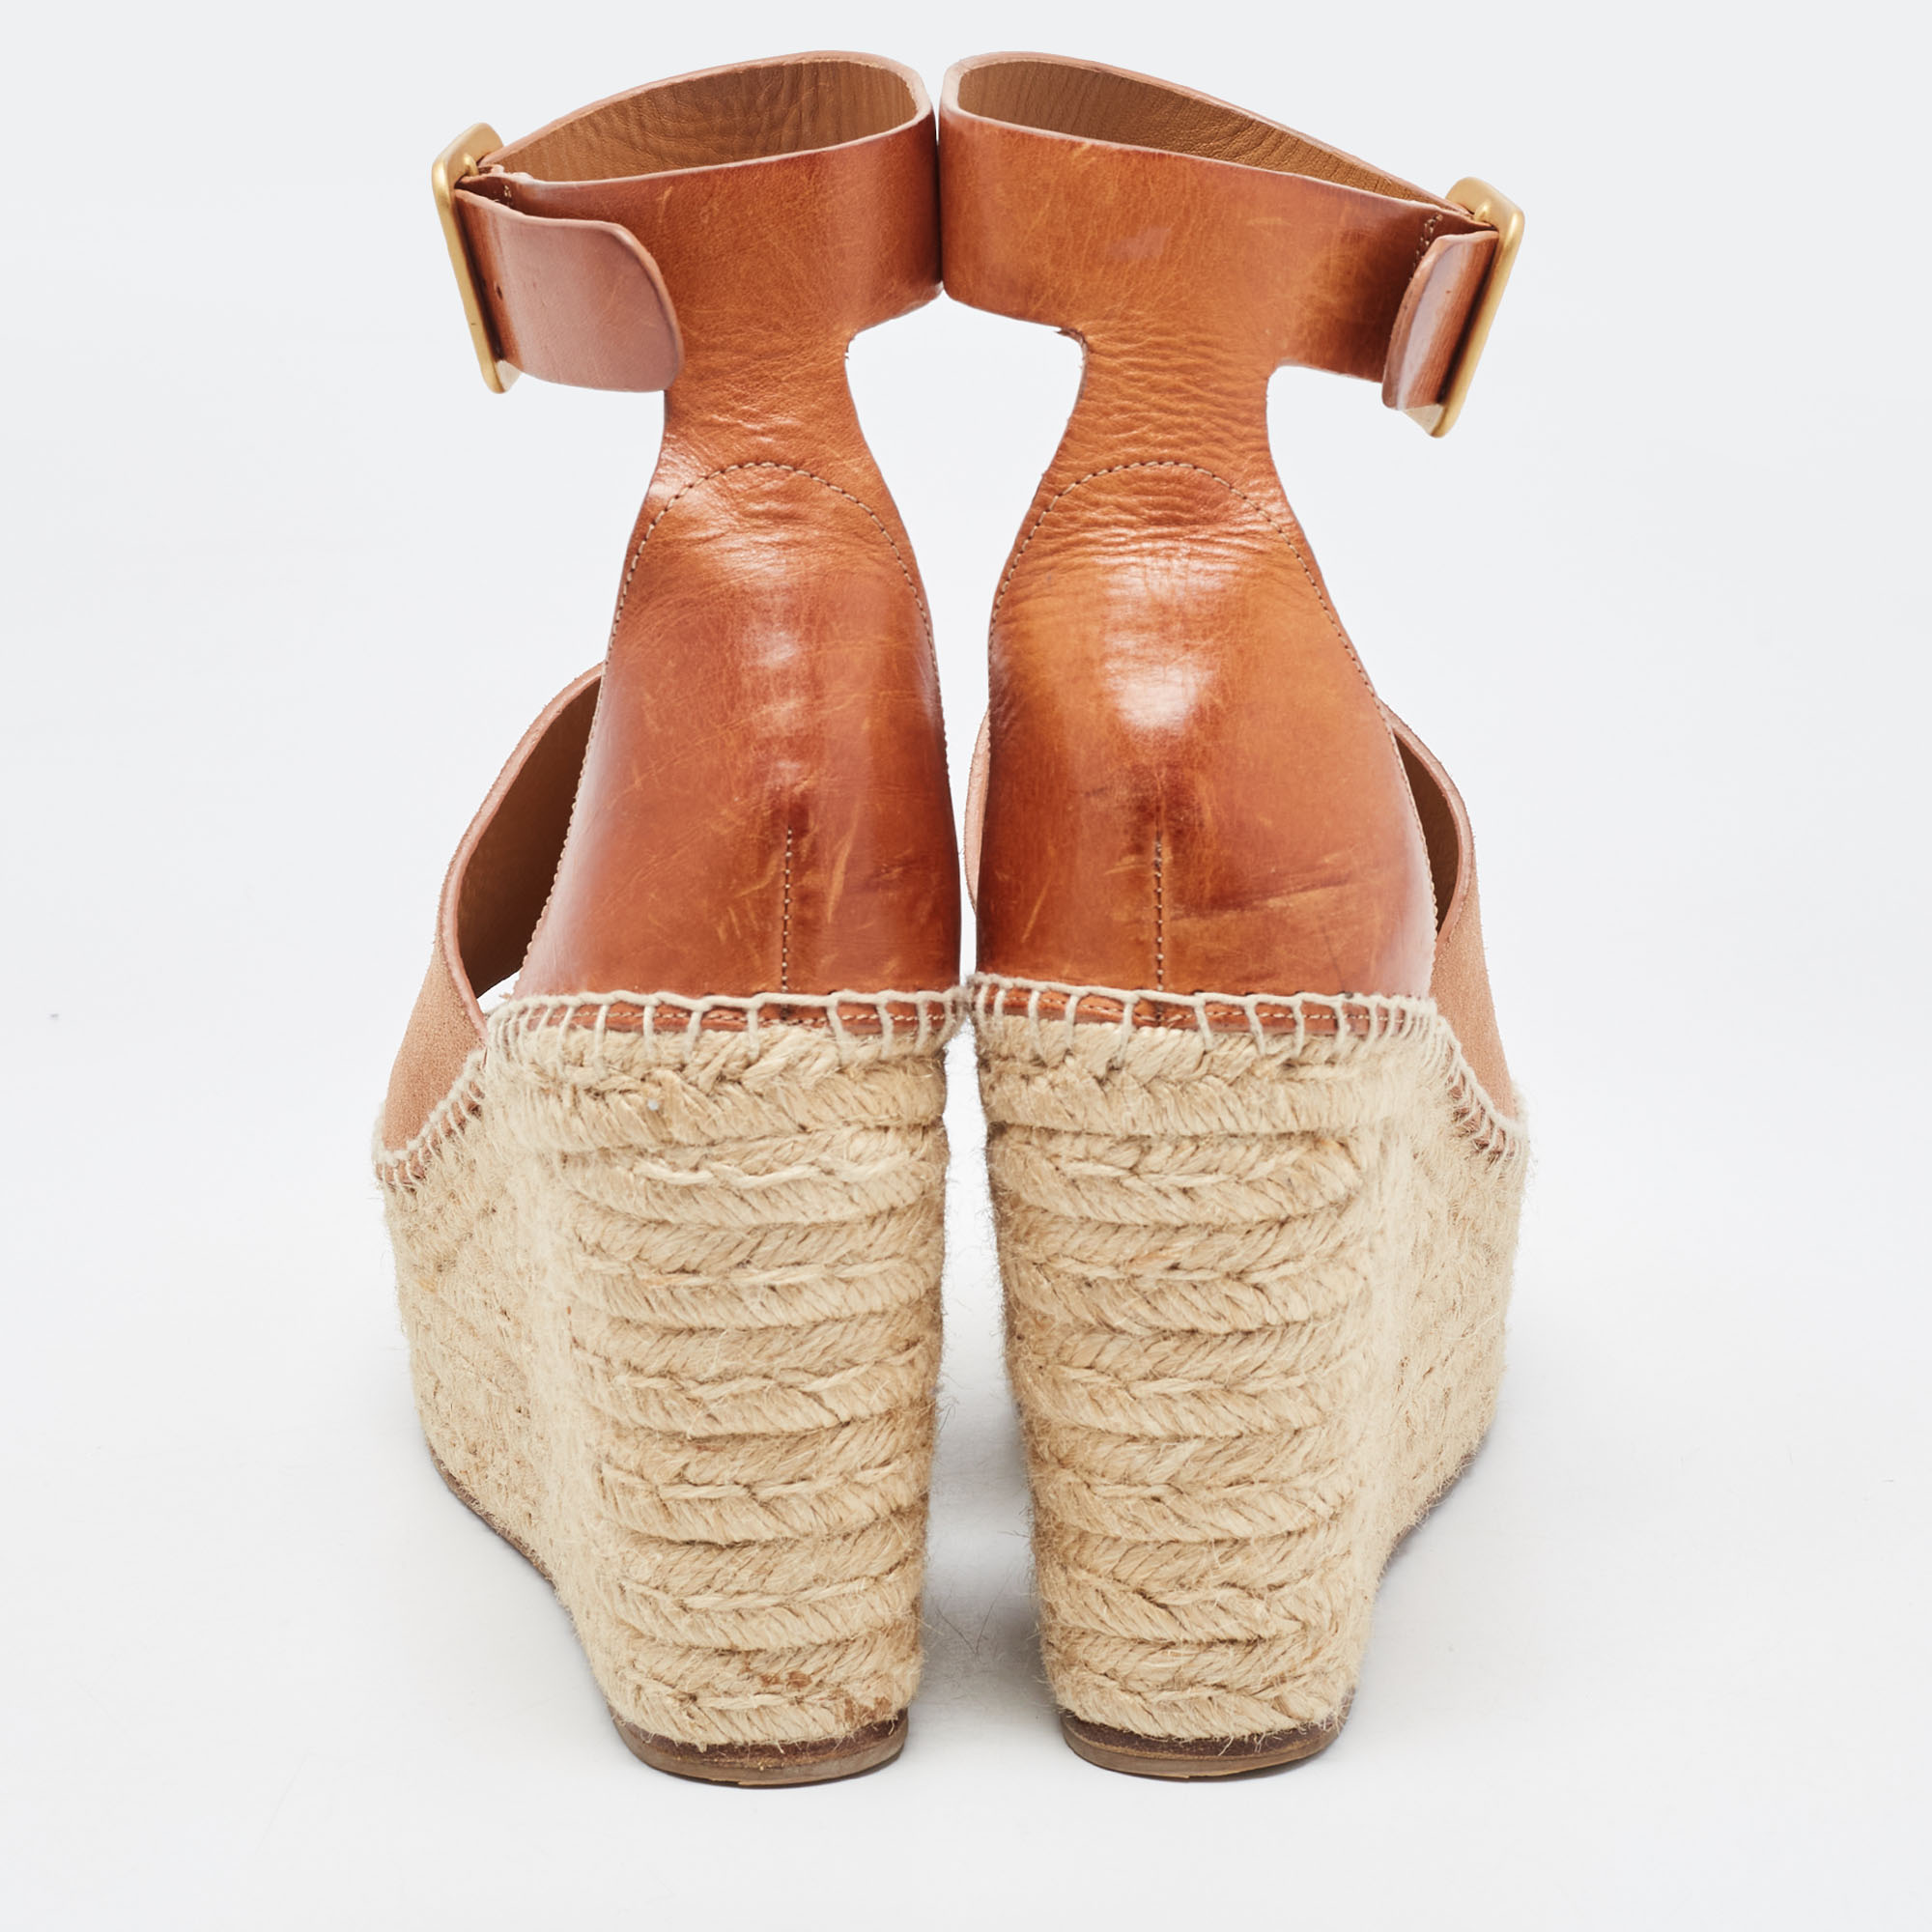 Chloe Tan Leather Wedge Platform Ankle Strap Sandals Size 39